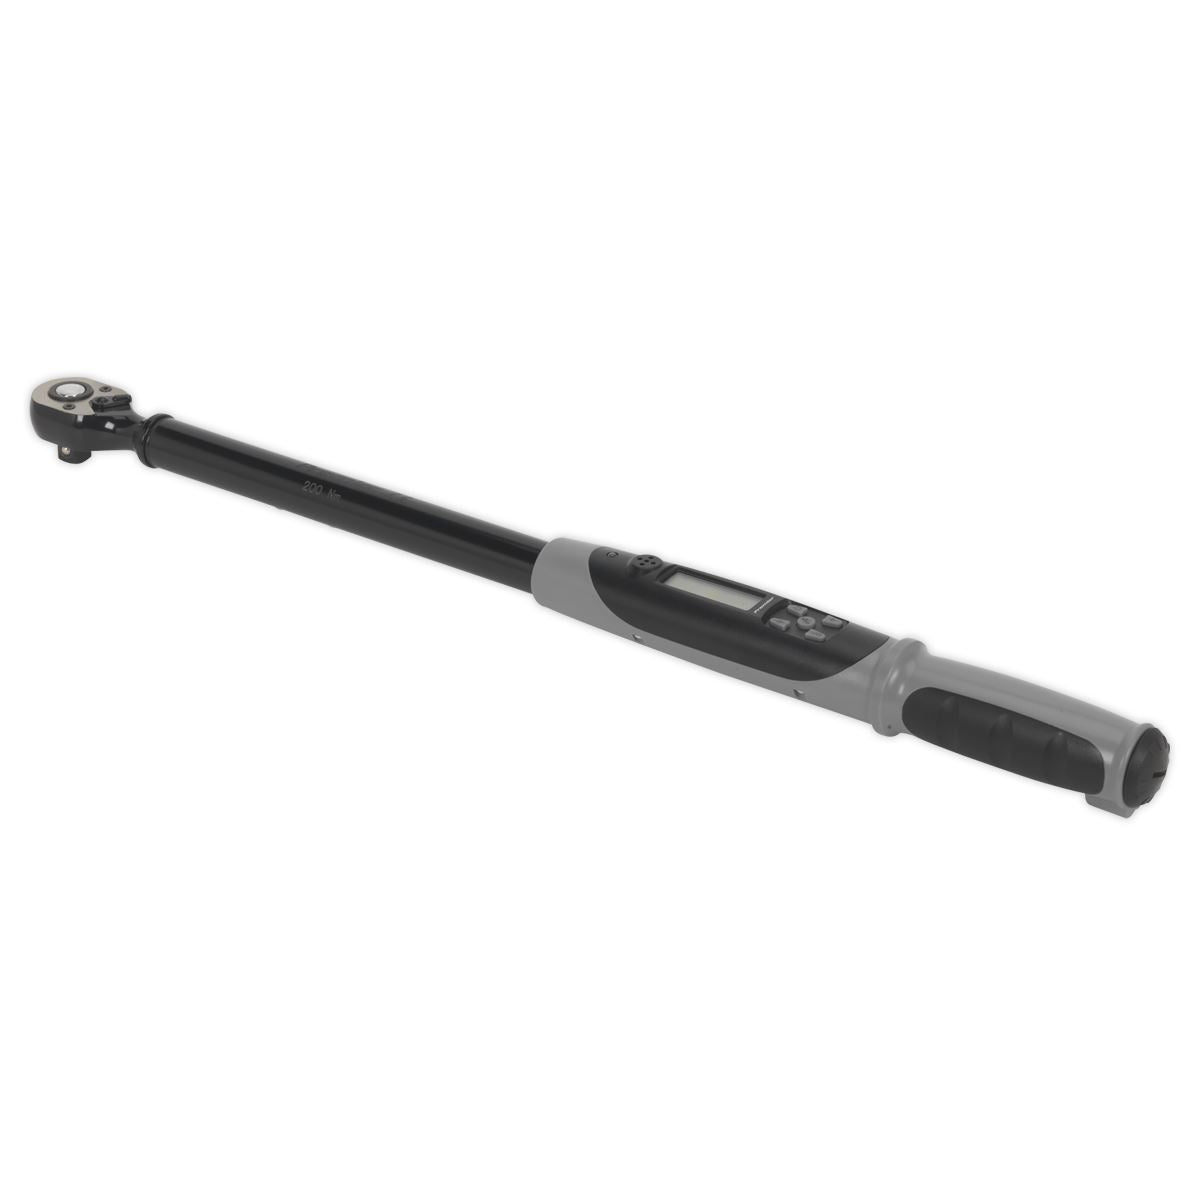 Sealey Angle Torque Wrench Digital 1/2"Sq Dr 20-200Nm Black Series STW306B